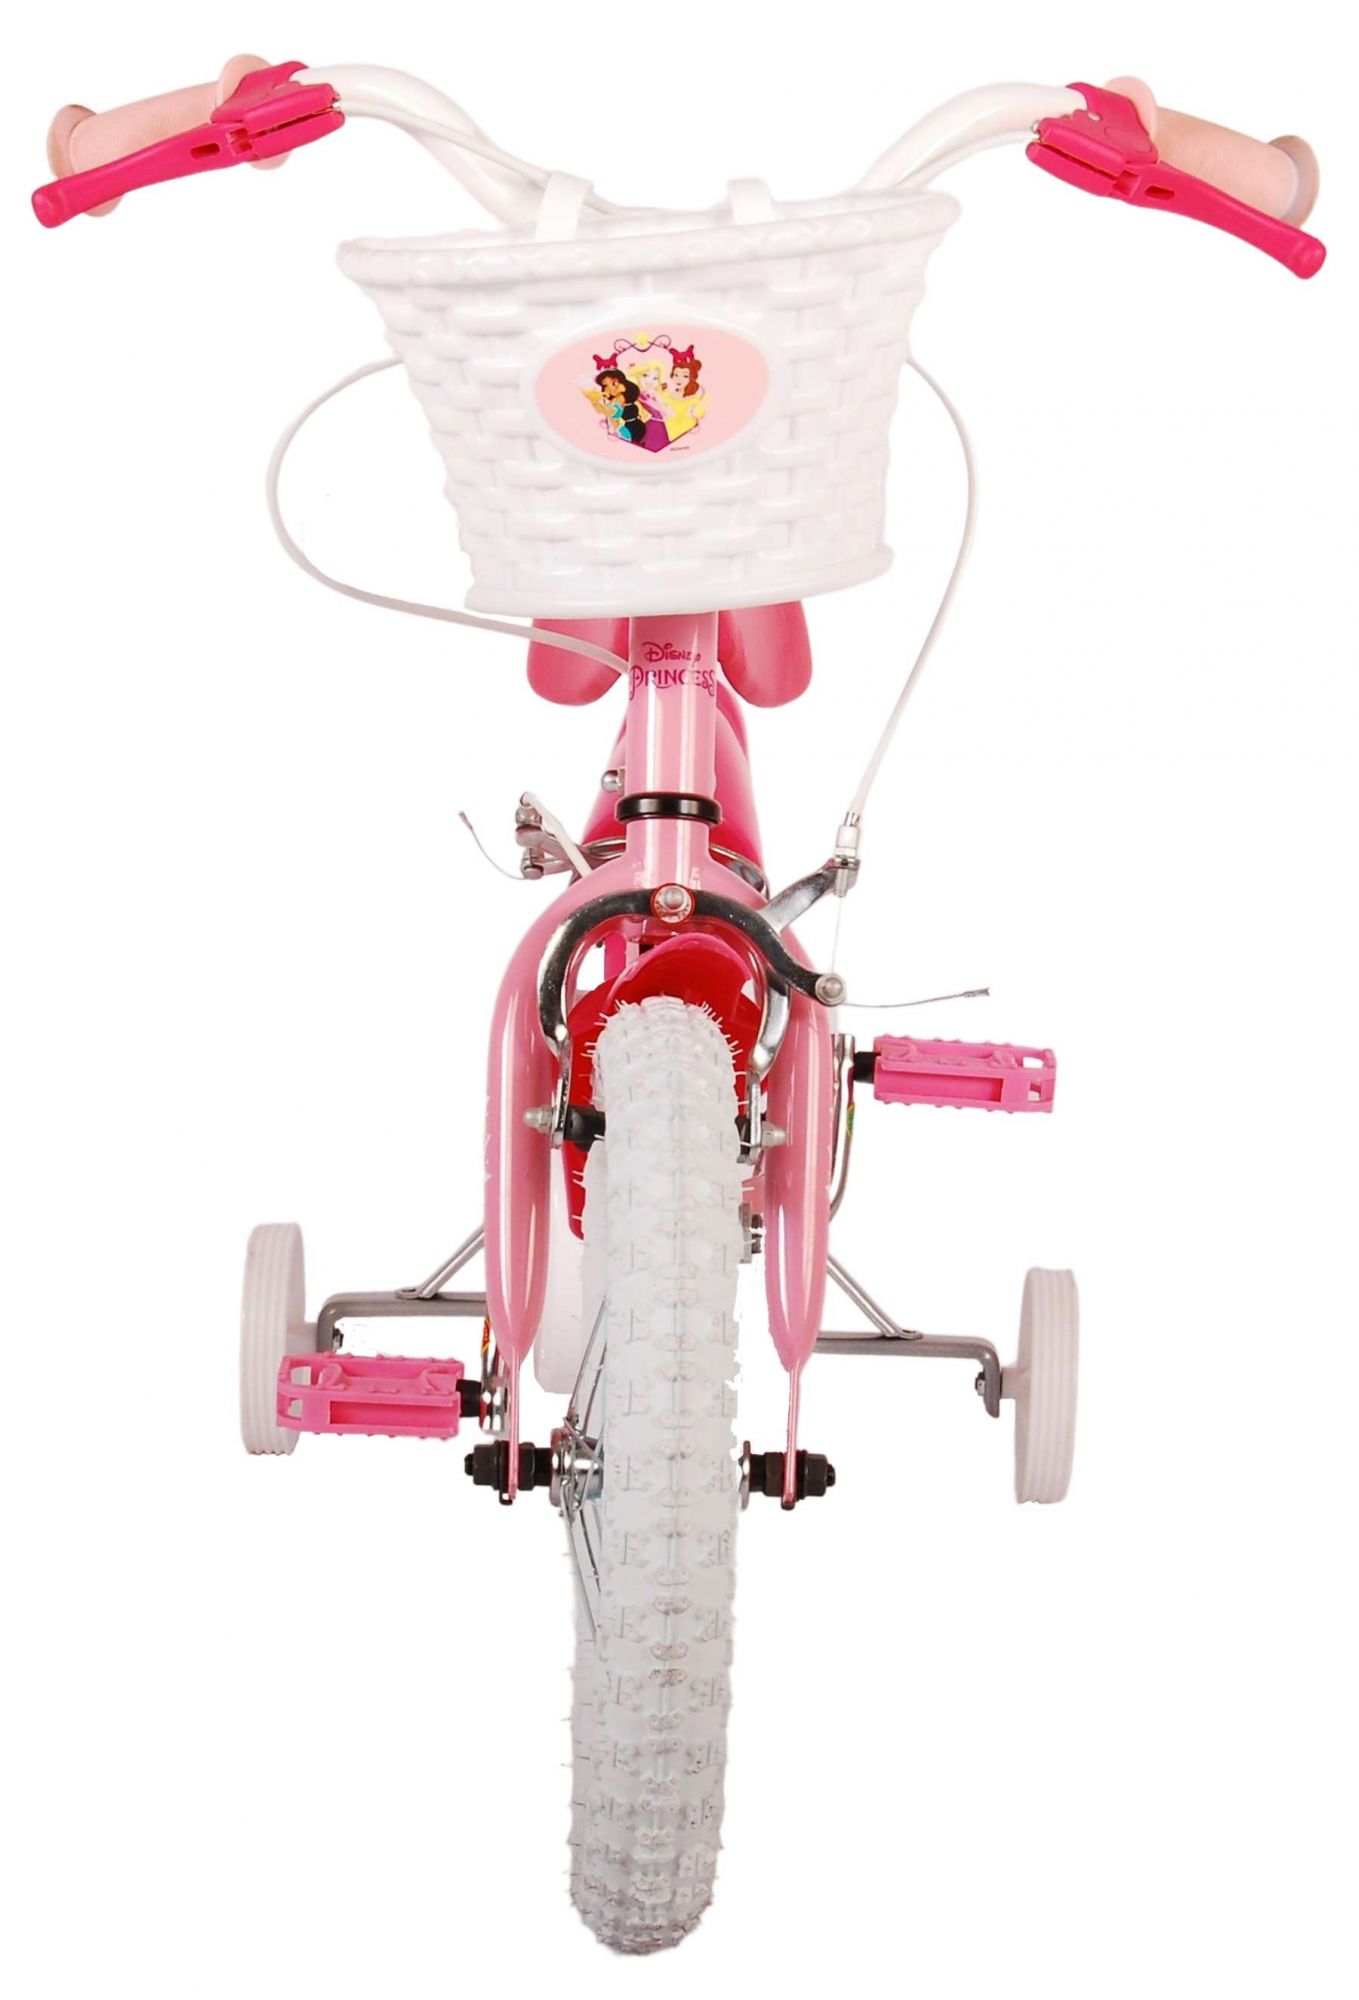 Kinderfahrrad Disney Princess für Mädchen 14 Zoll Kinderrad in Rosa